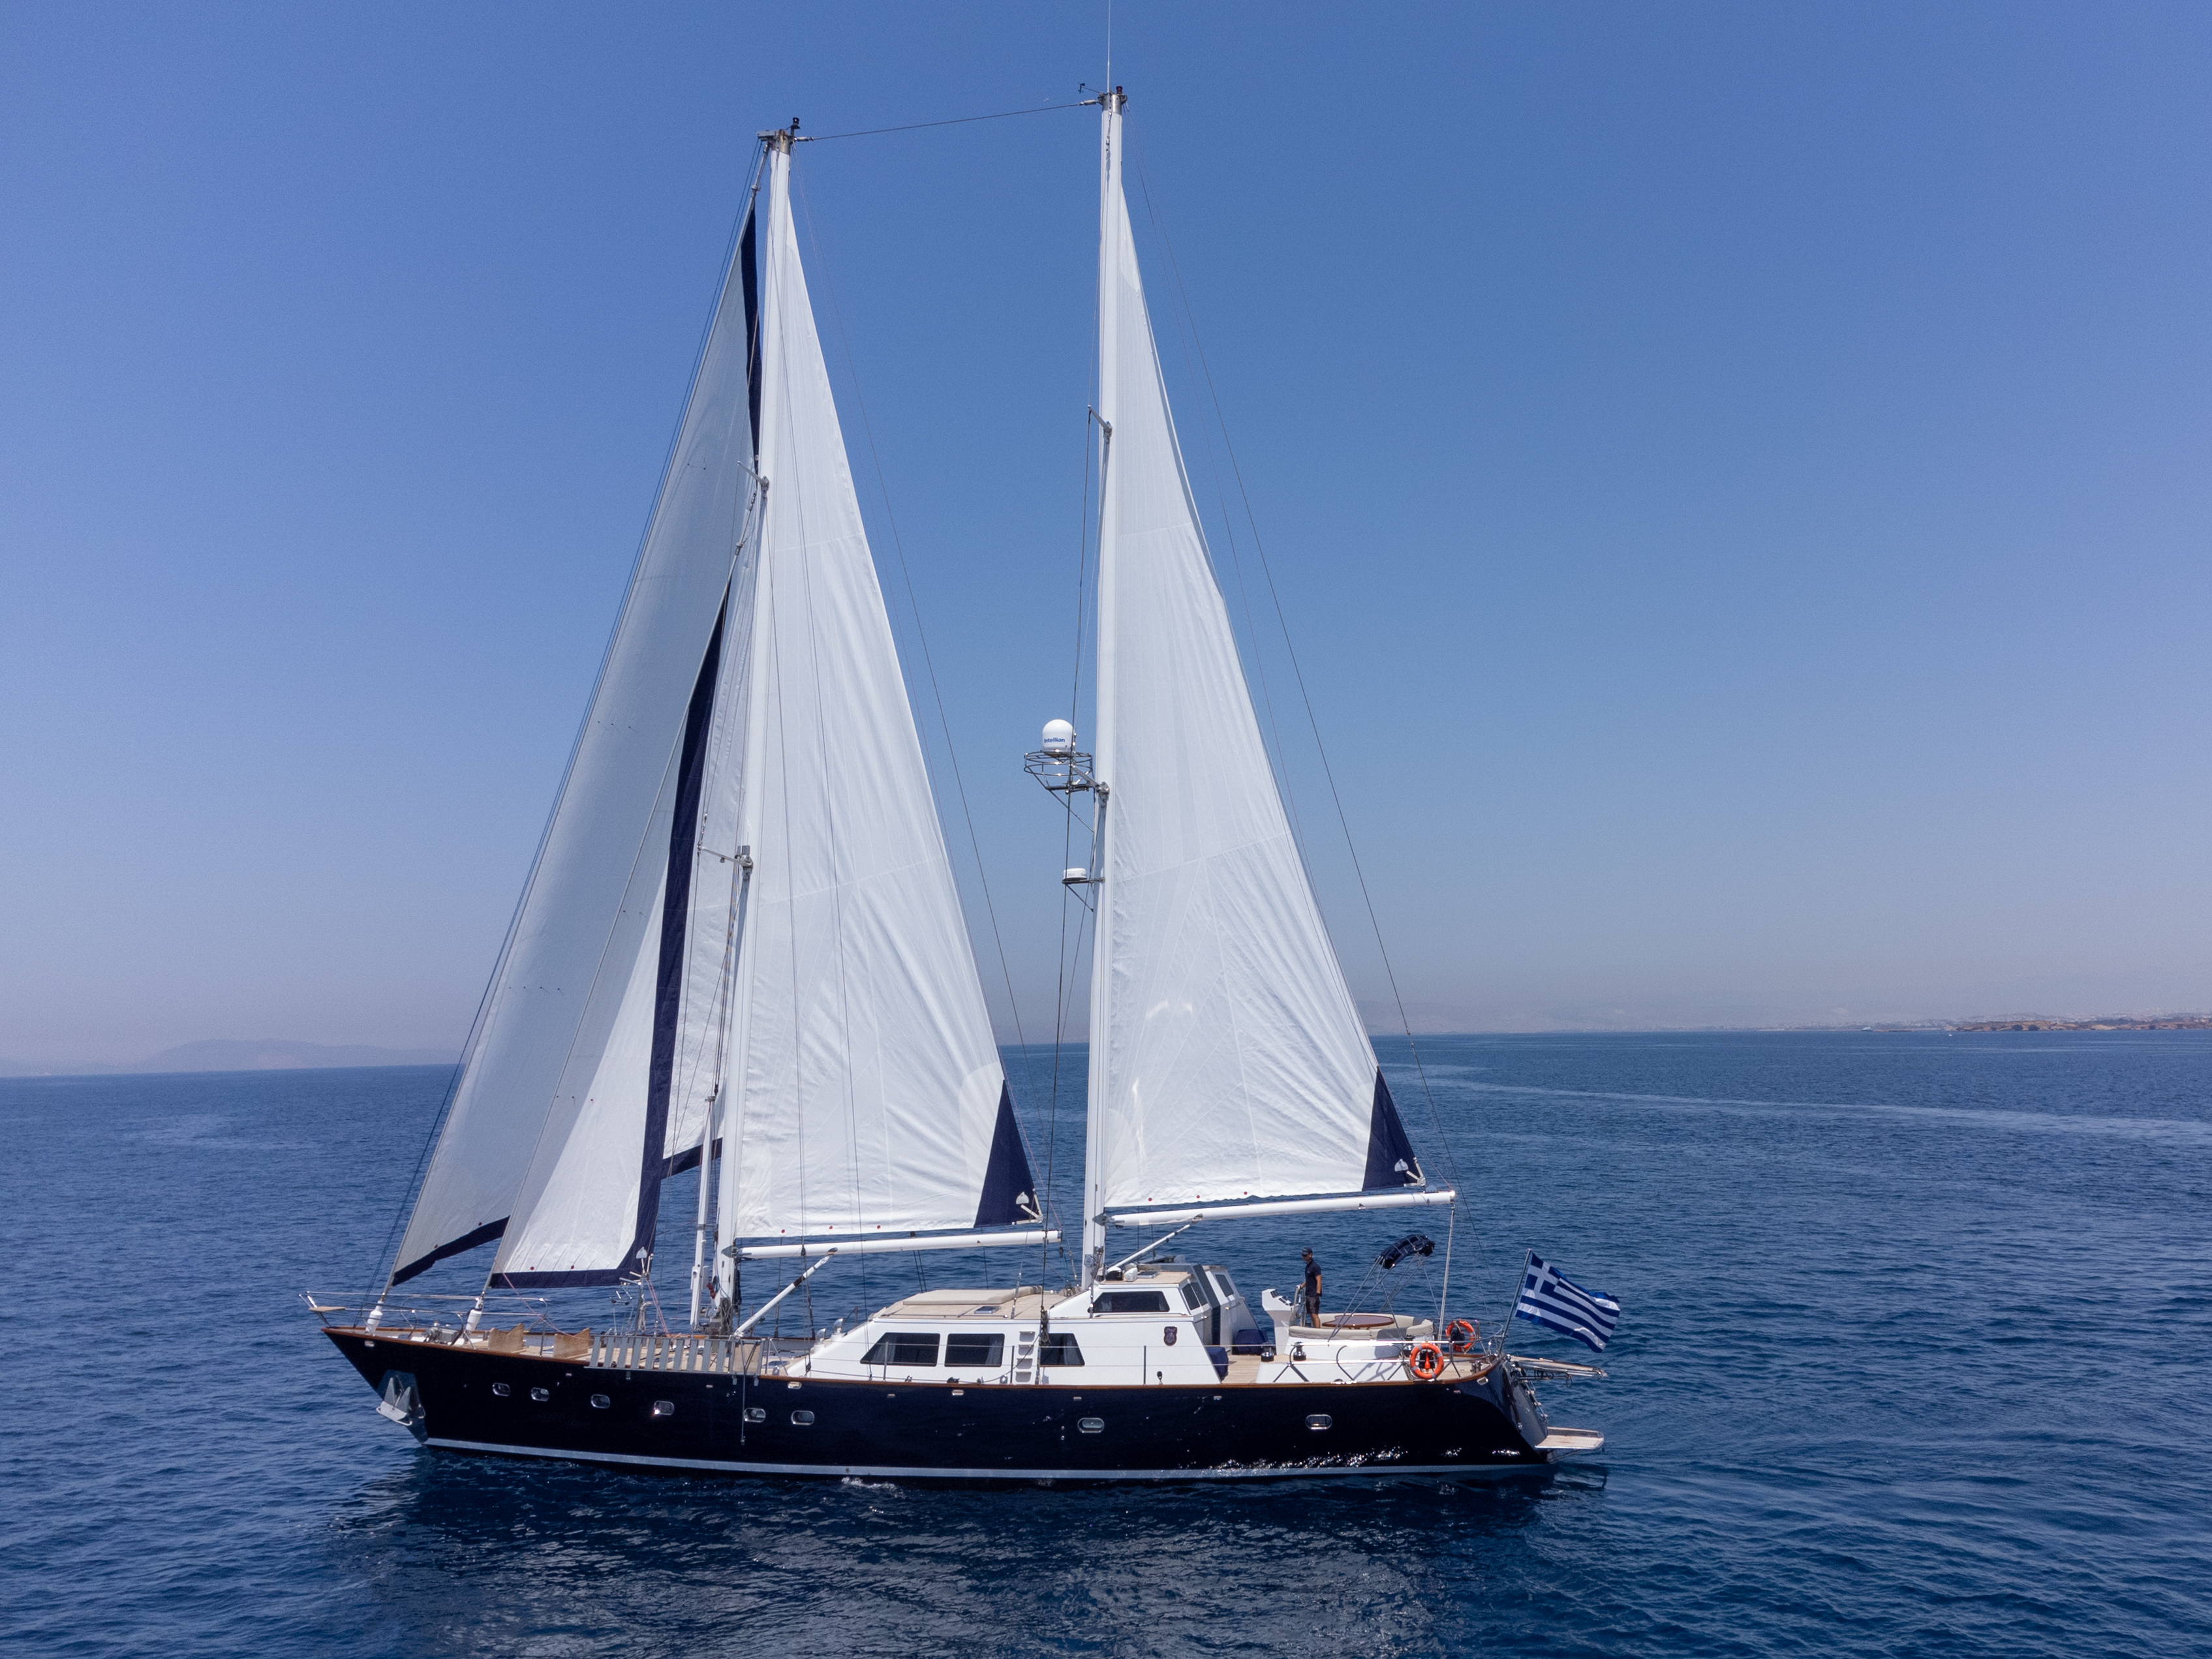 CCYD 85 - Gulet rental worldwide & Boat hire in Greece Athens and Saronic Gulf Athens Piraeus Marina Zea 5